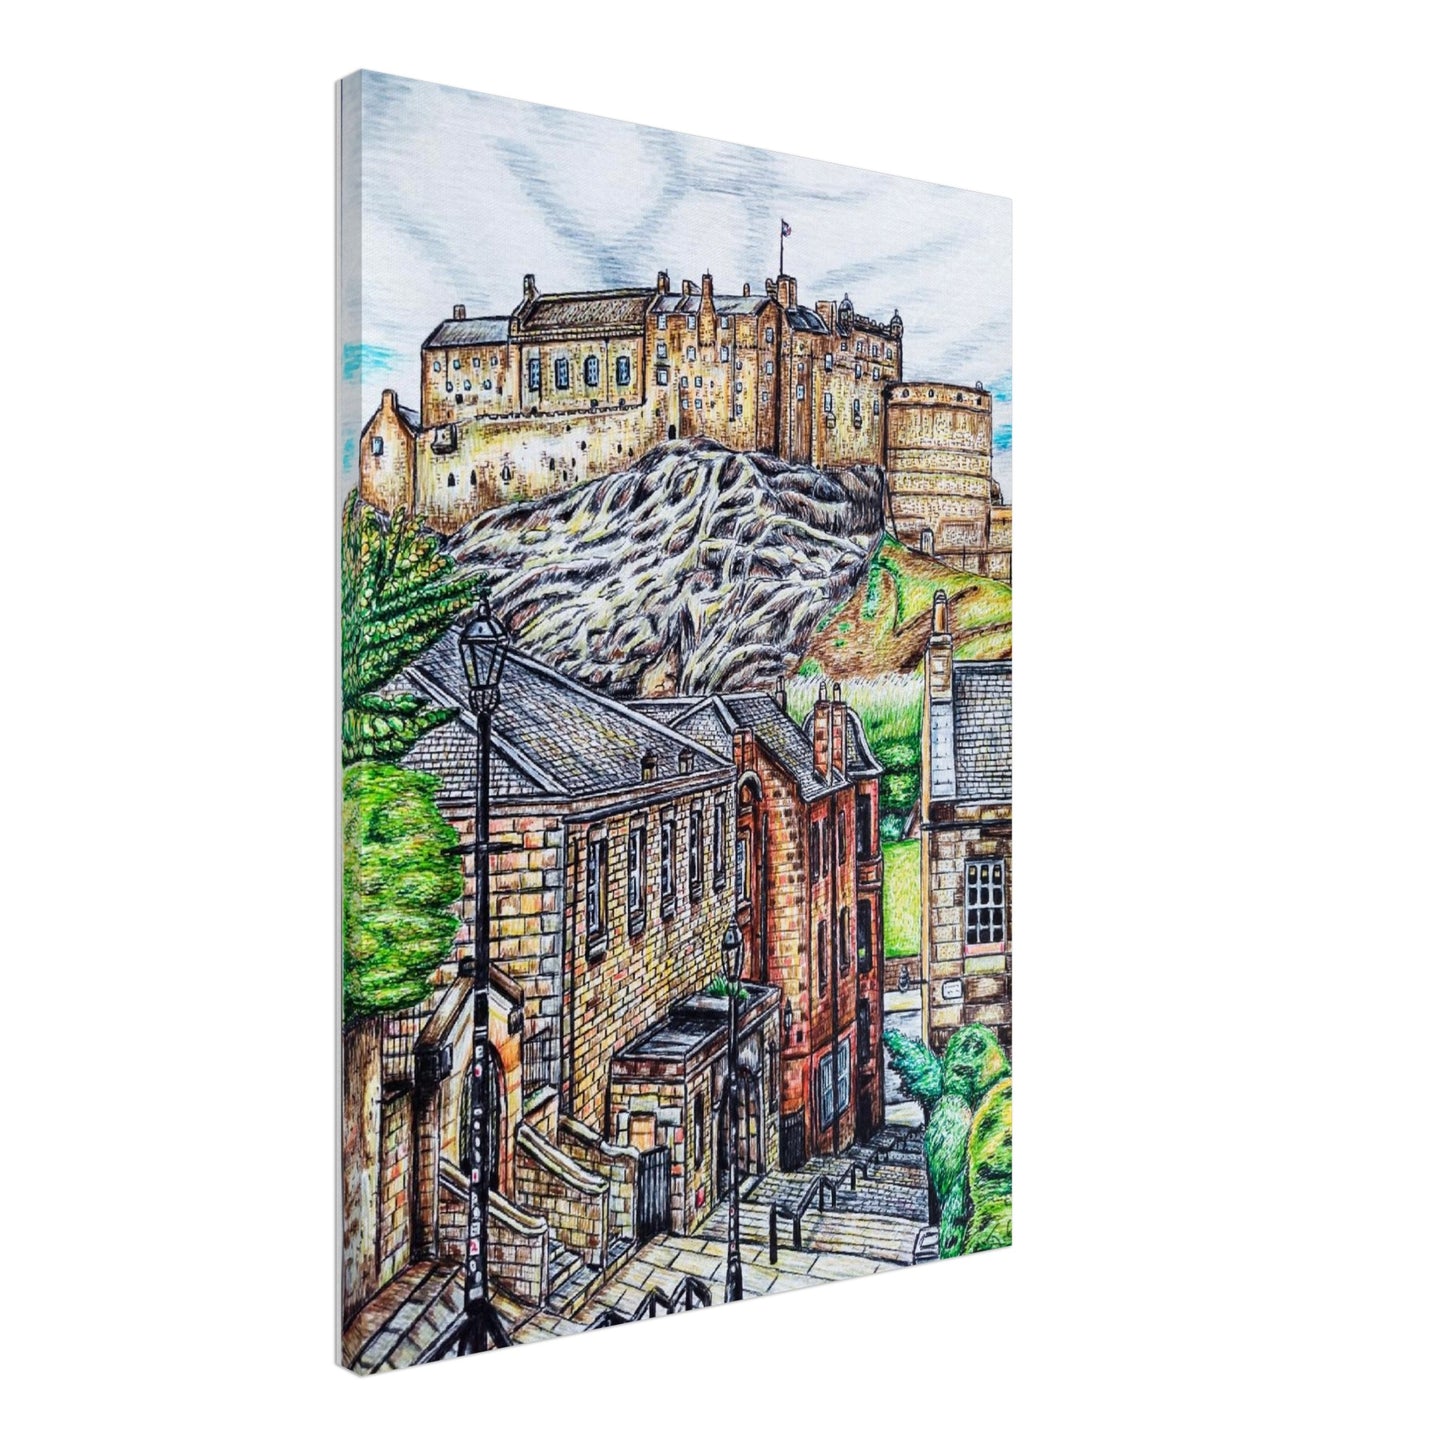 Vennel View Edinburgh Canvas Print